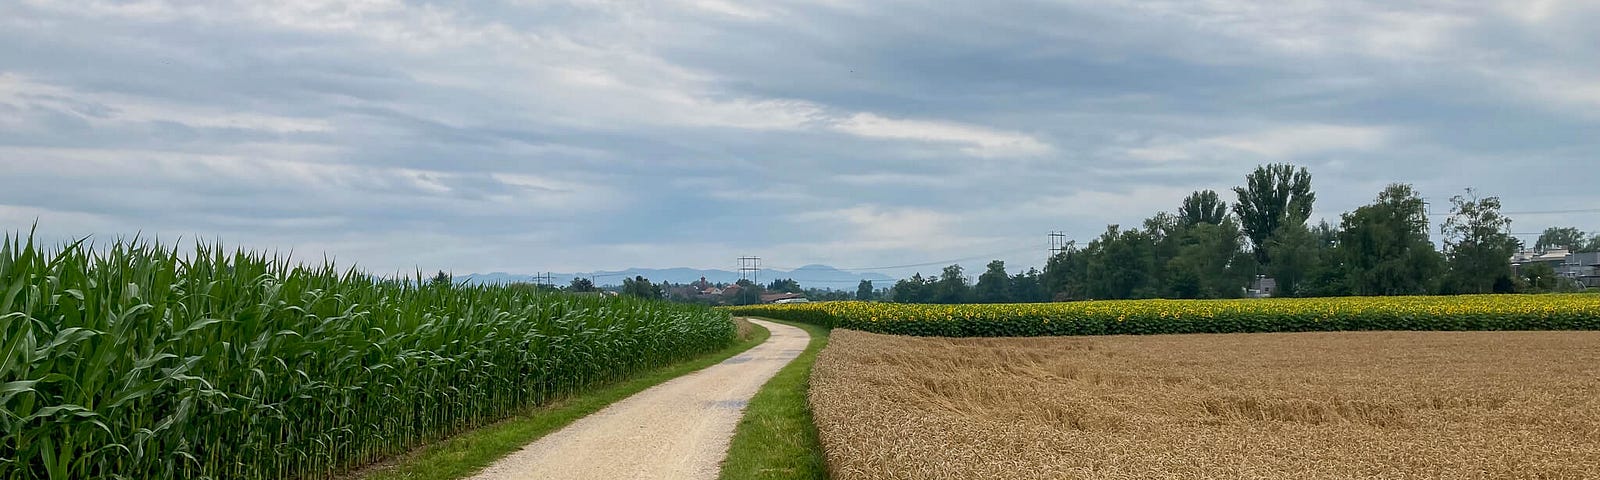 Gravel path running between a cornfield and a wheatfield